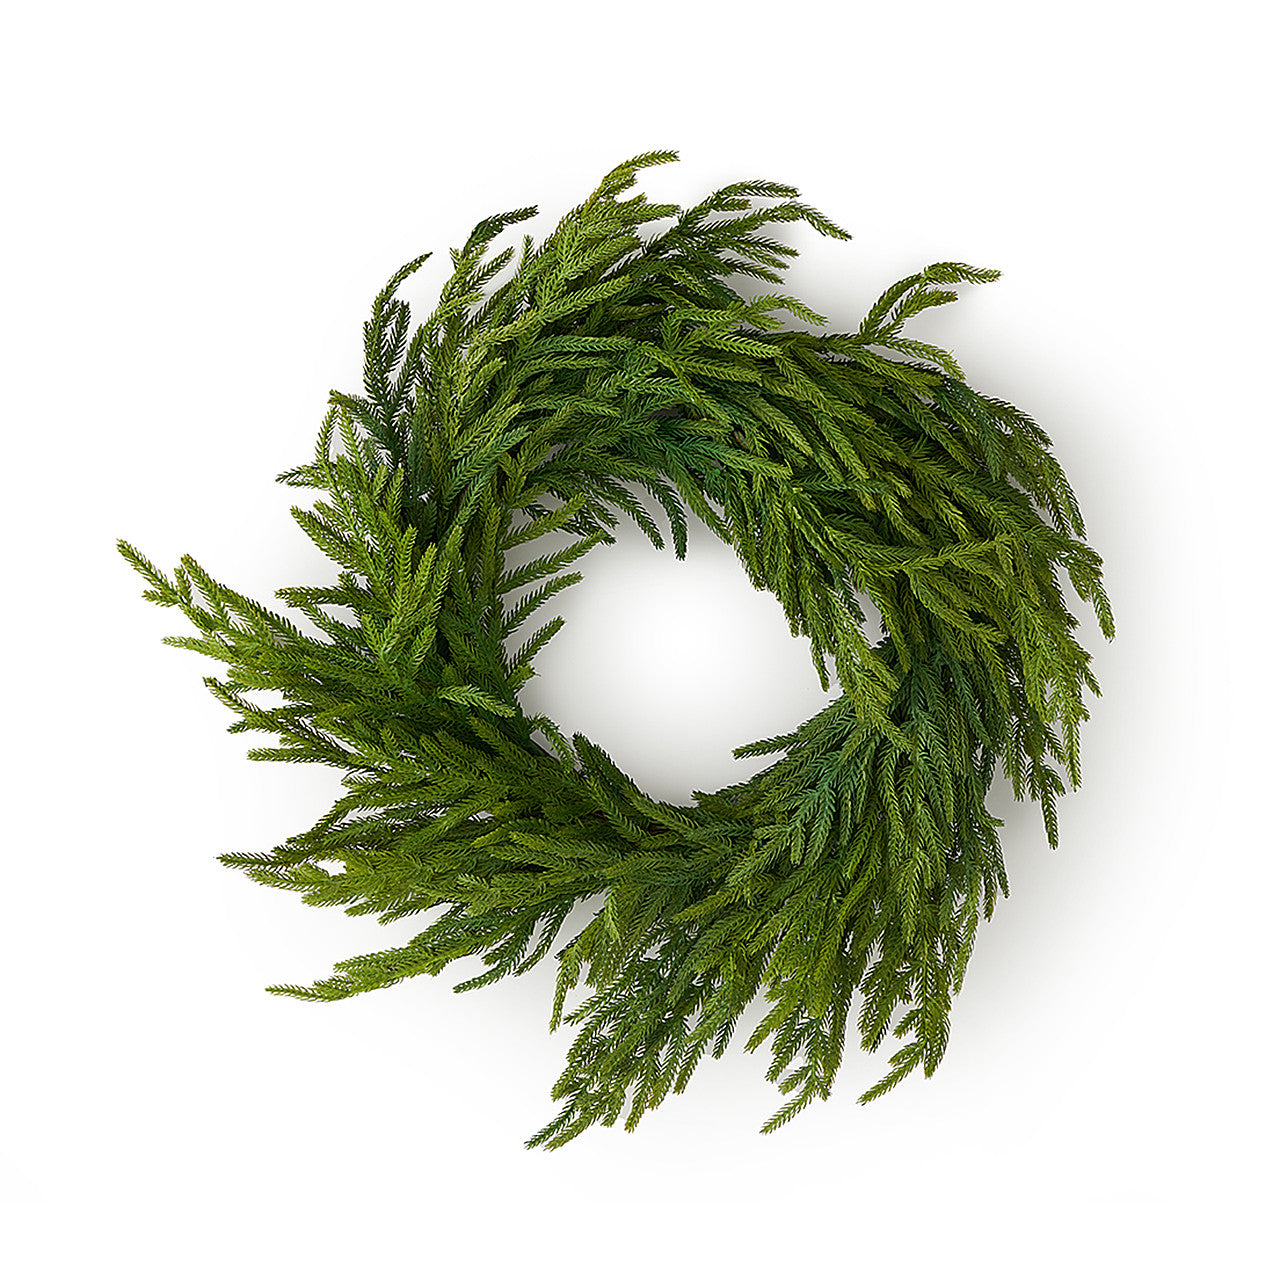 24” Just Cut Norfolk Pine Wreath Natural Green